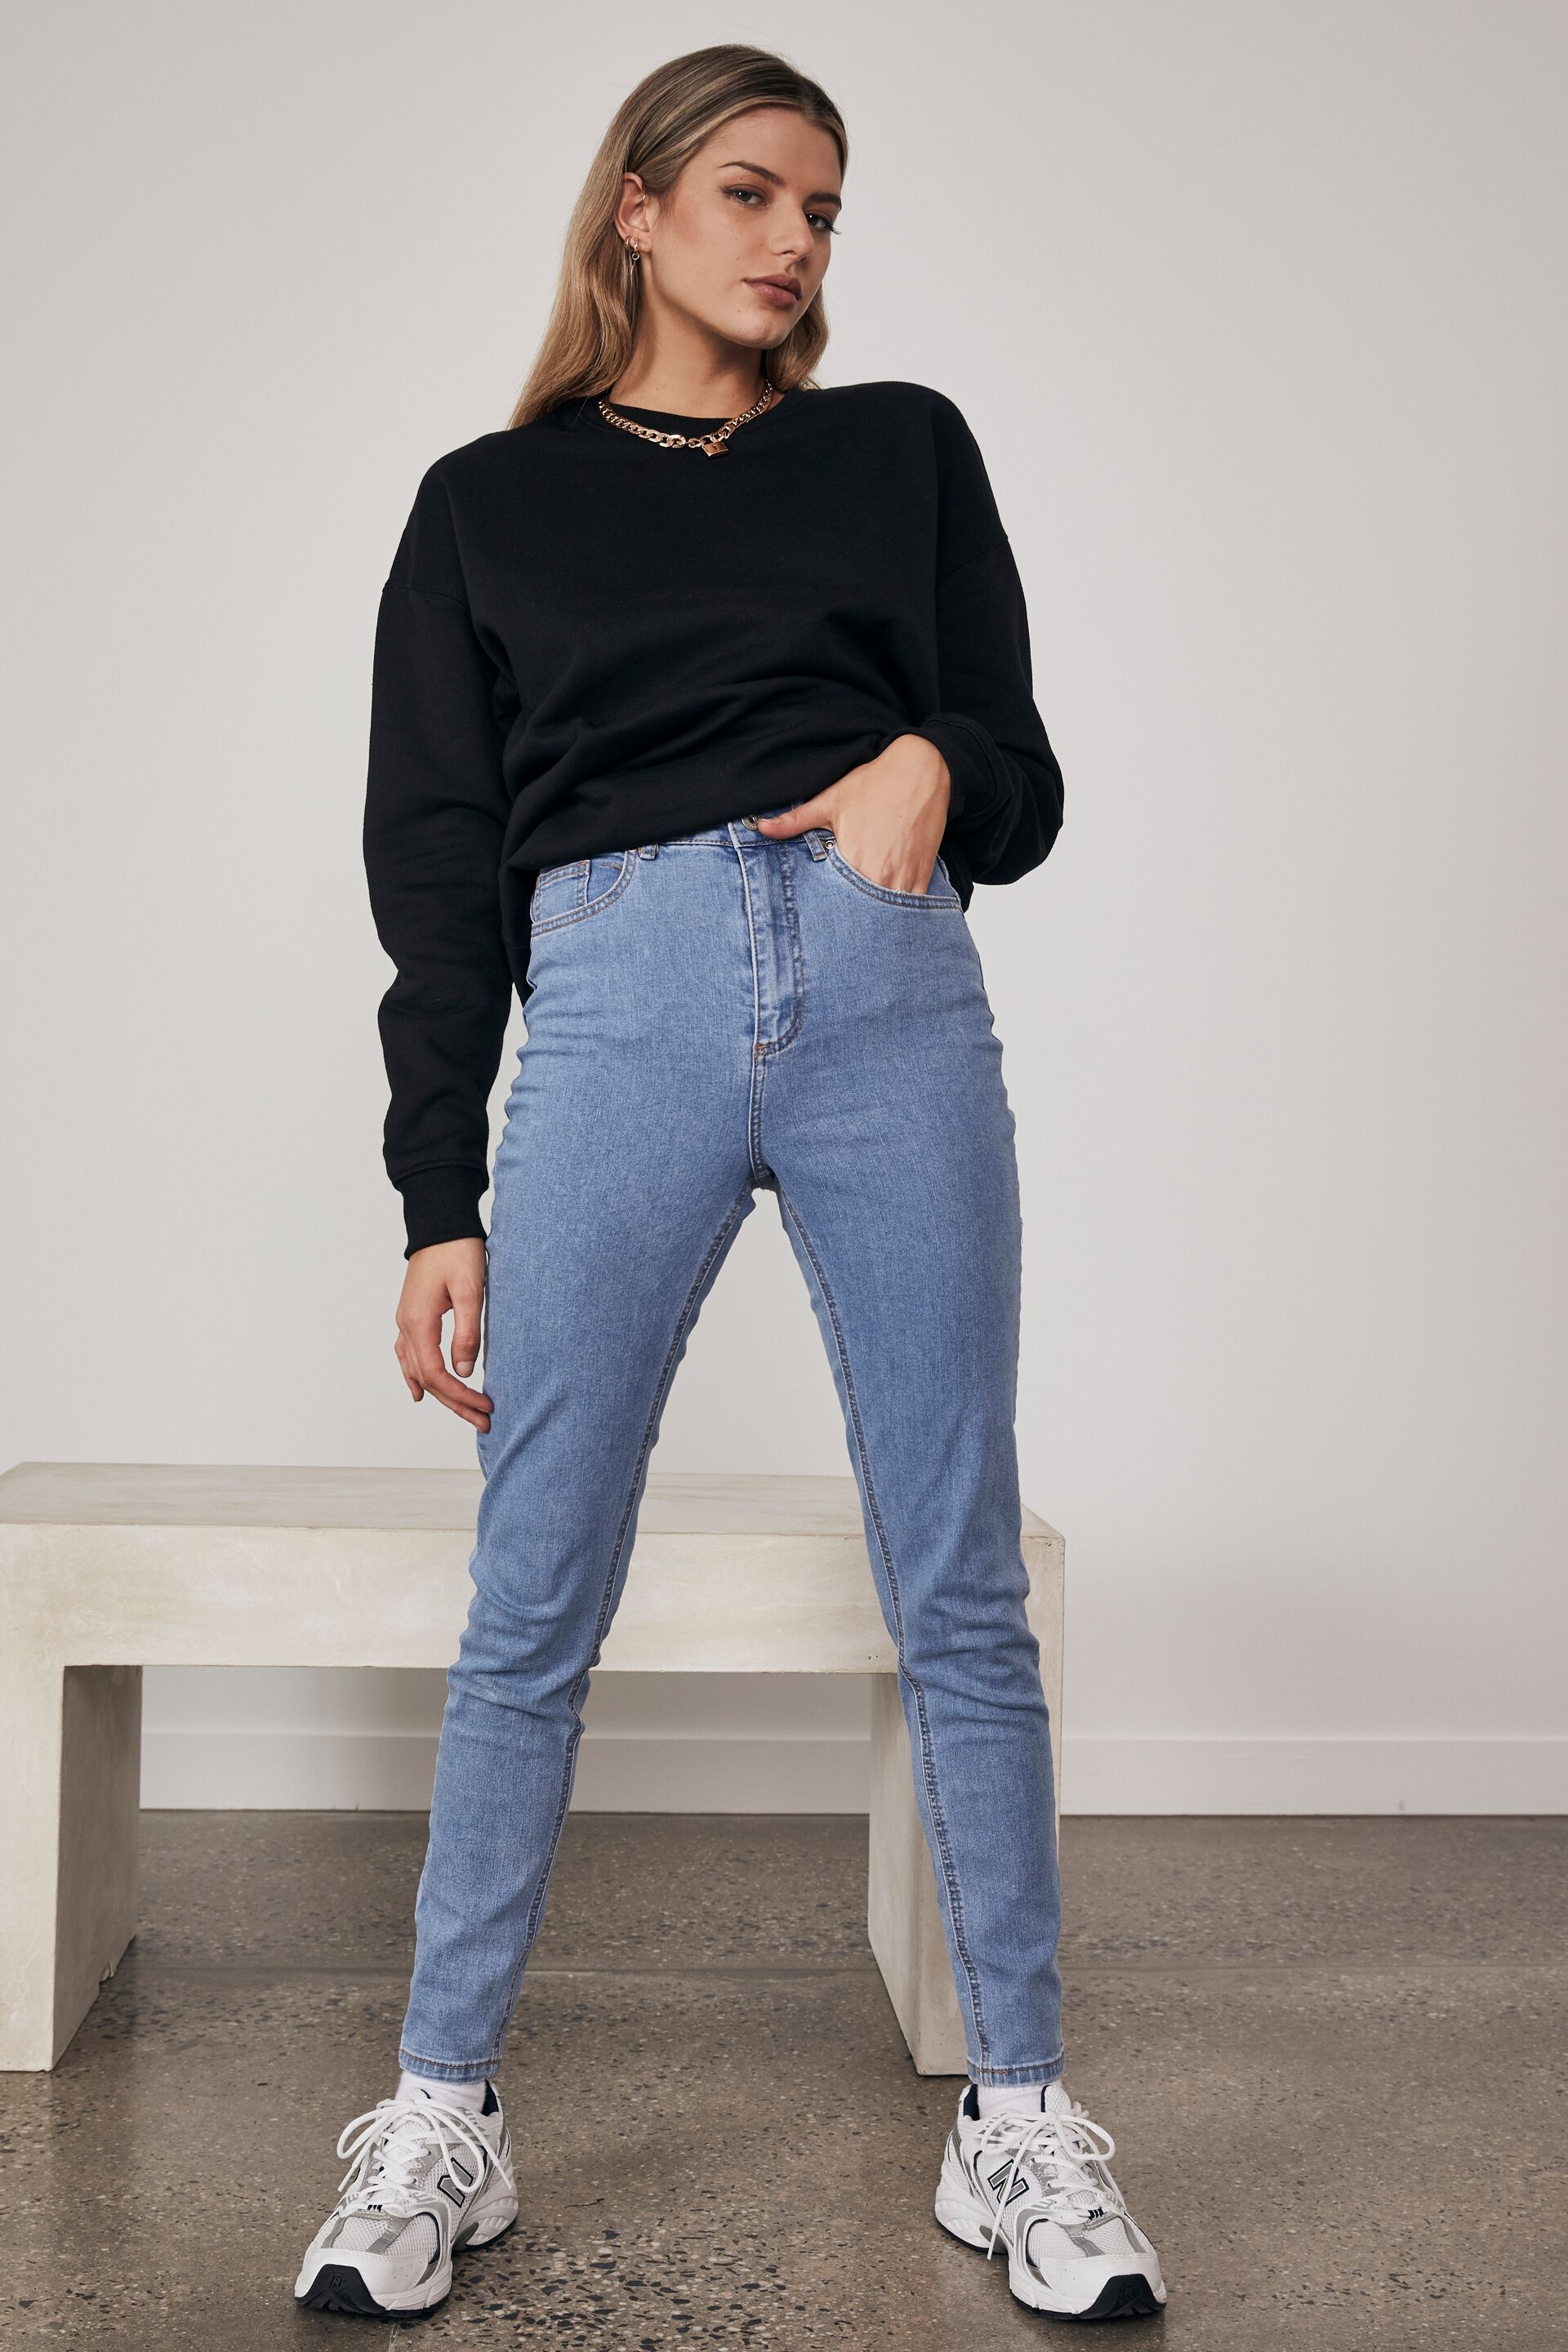 mr price ladies jeans 2019